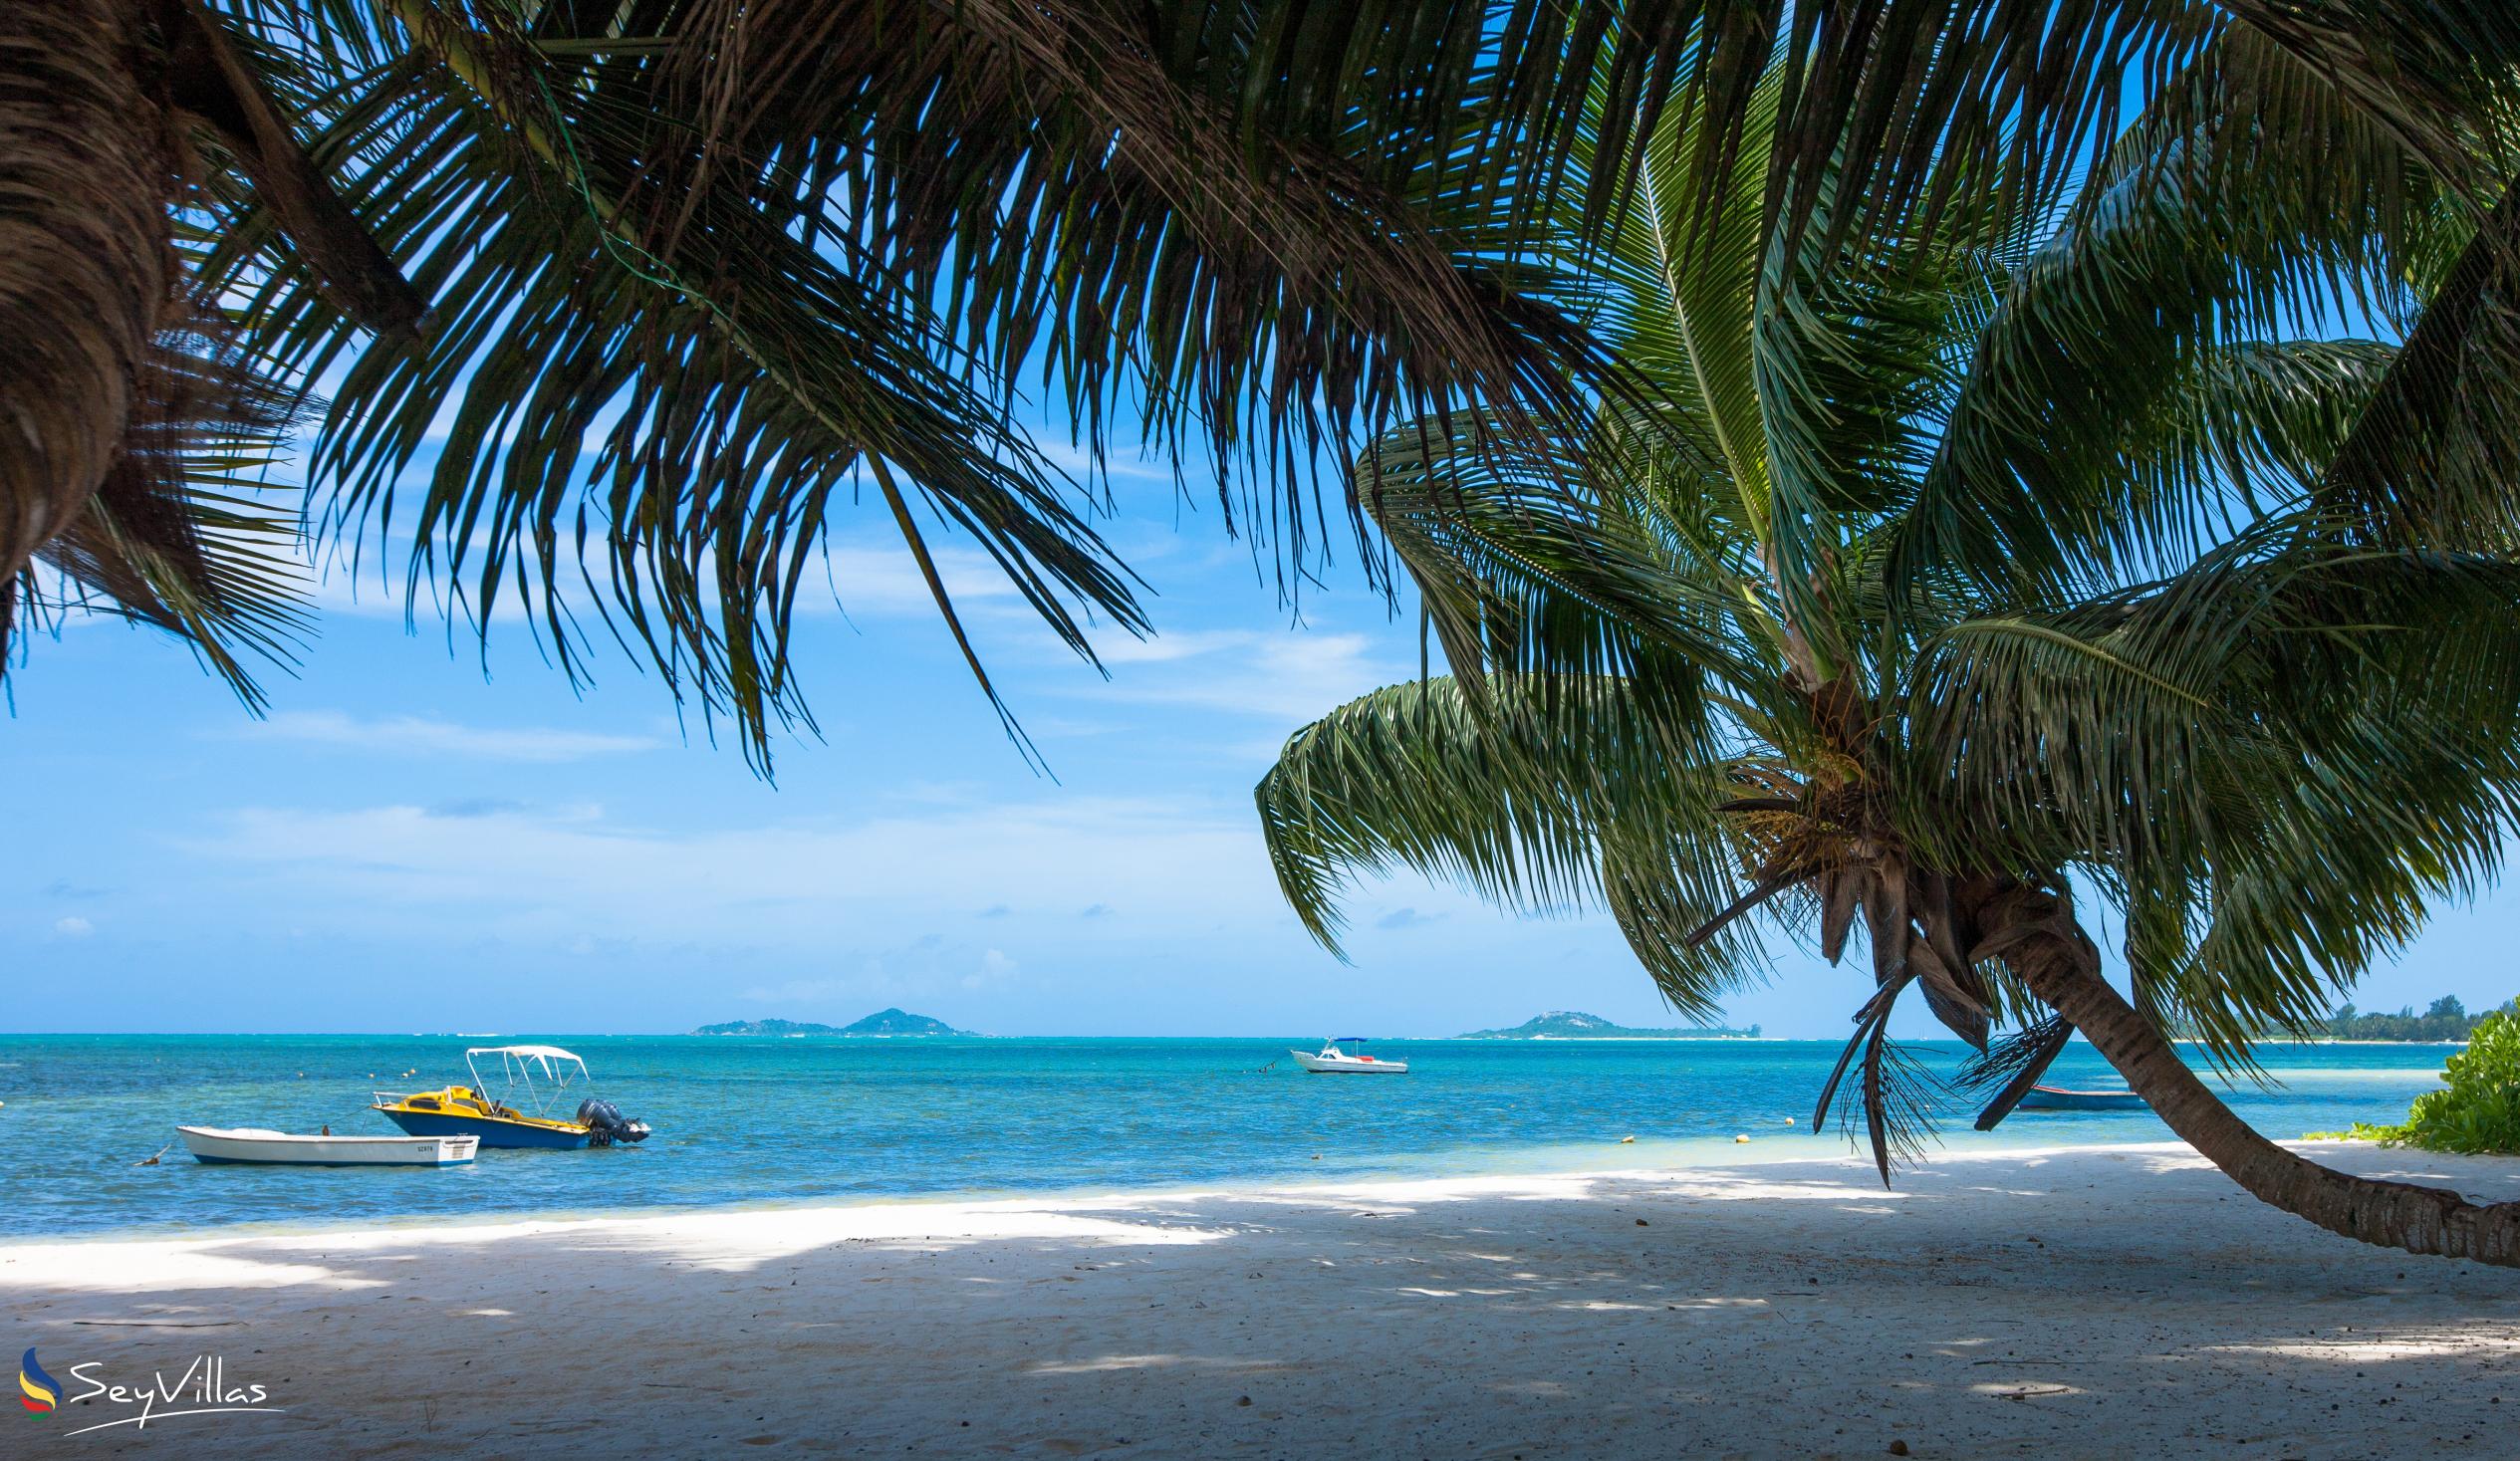 Photo 72: Le Relax Beach Resort - Beaches - Praslin (Seychelles)